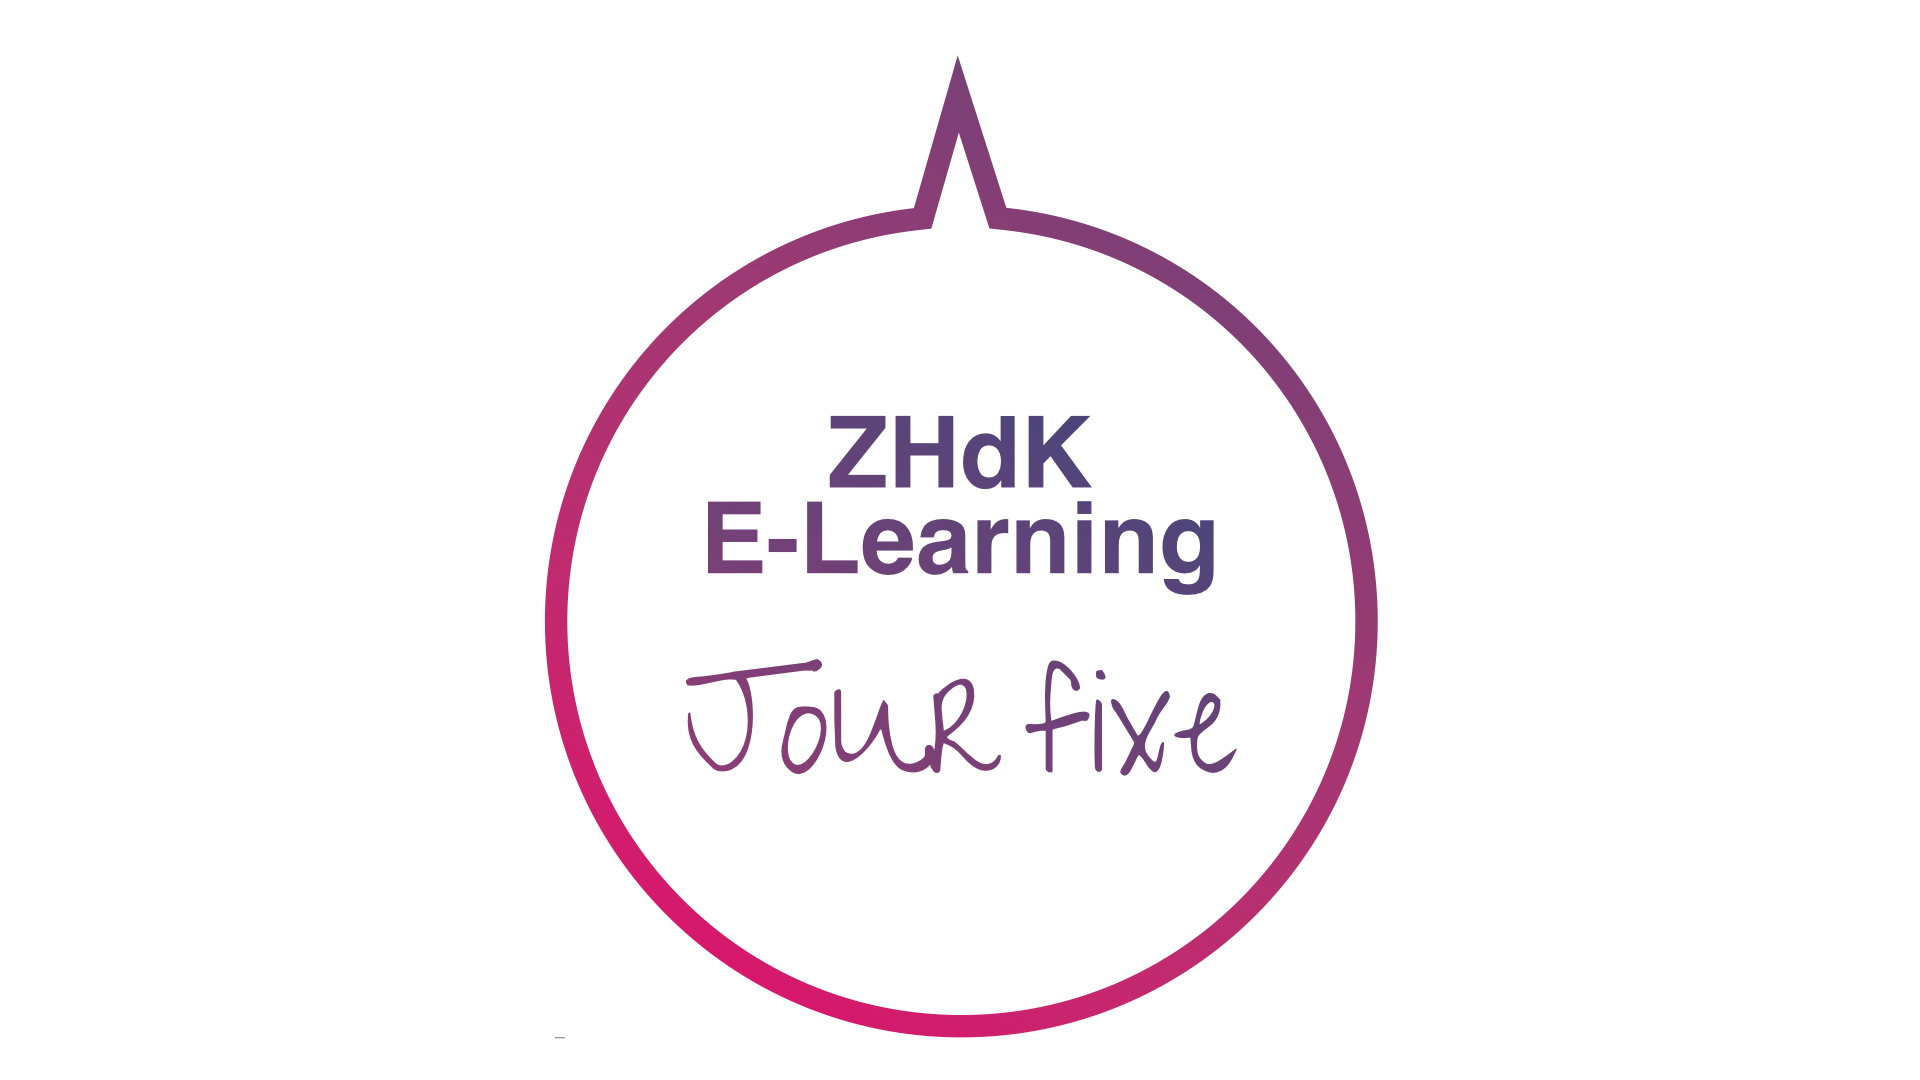 ZHdK E-Learning Jour fixe